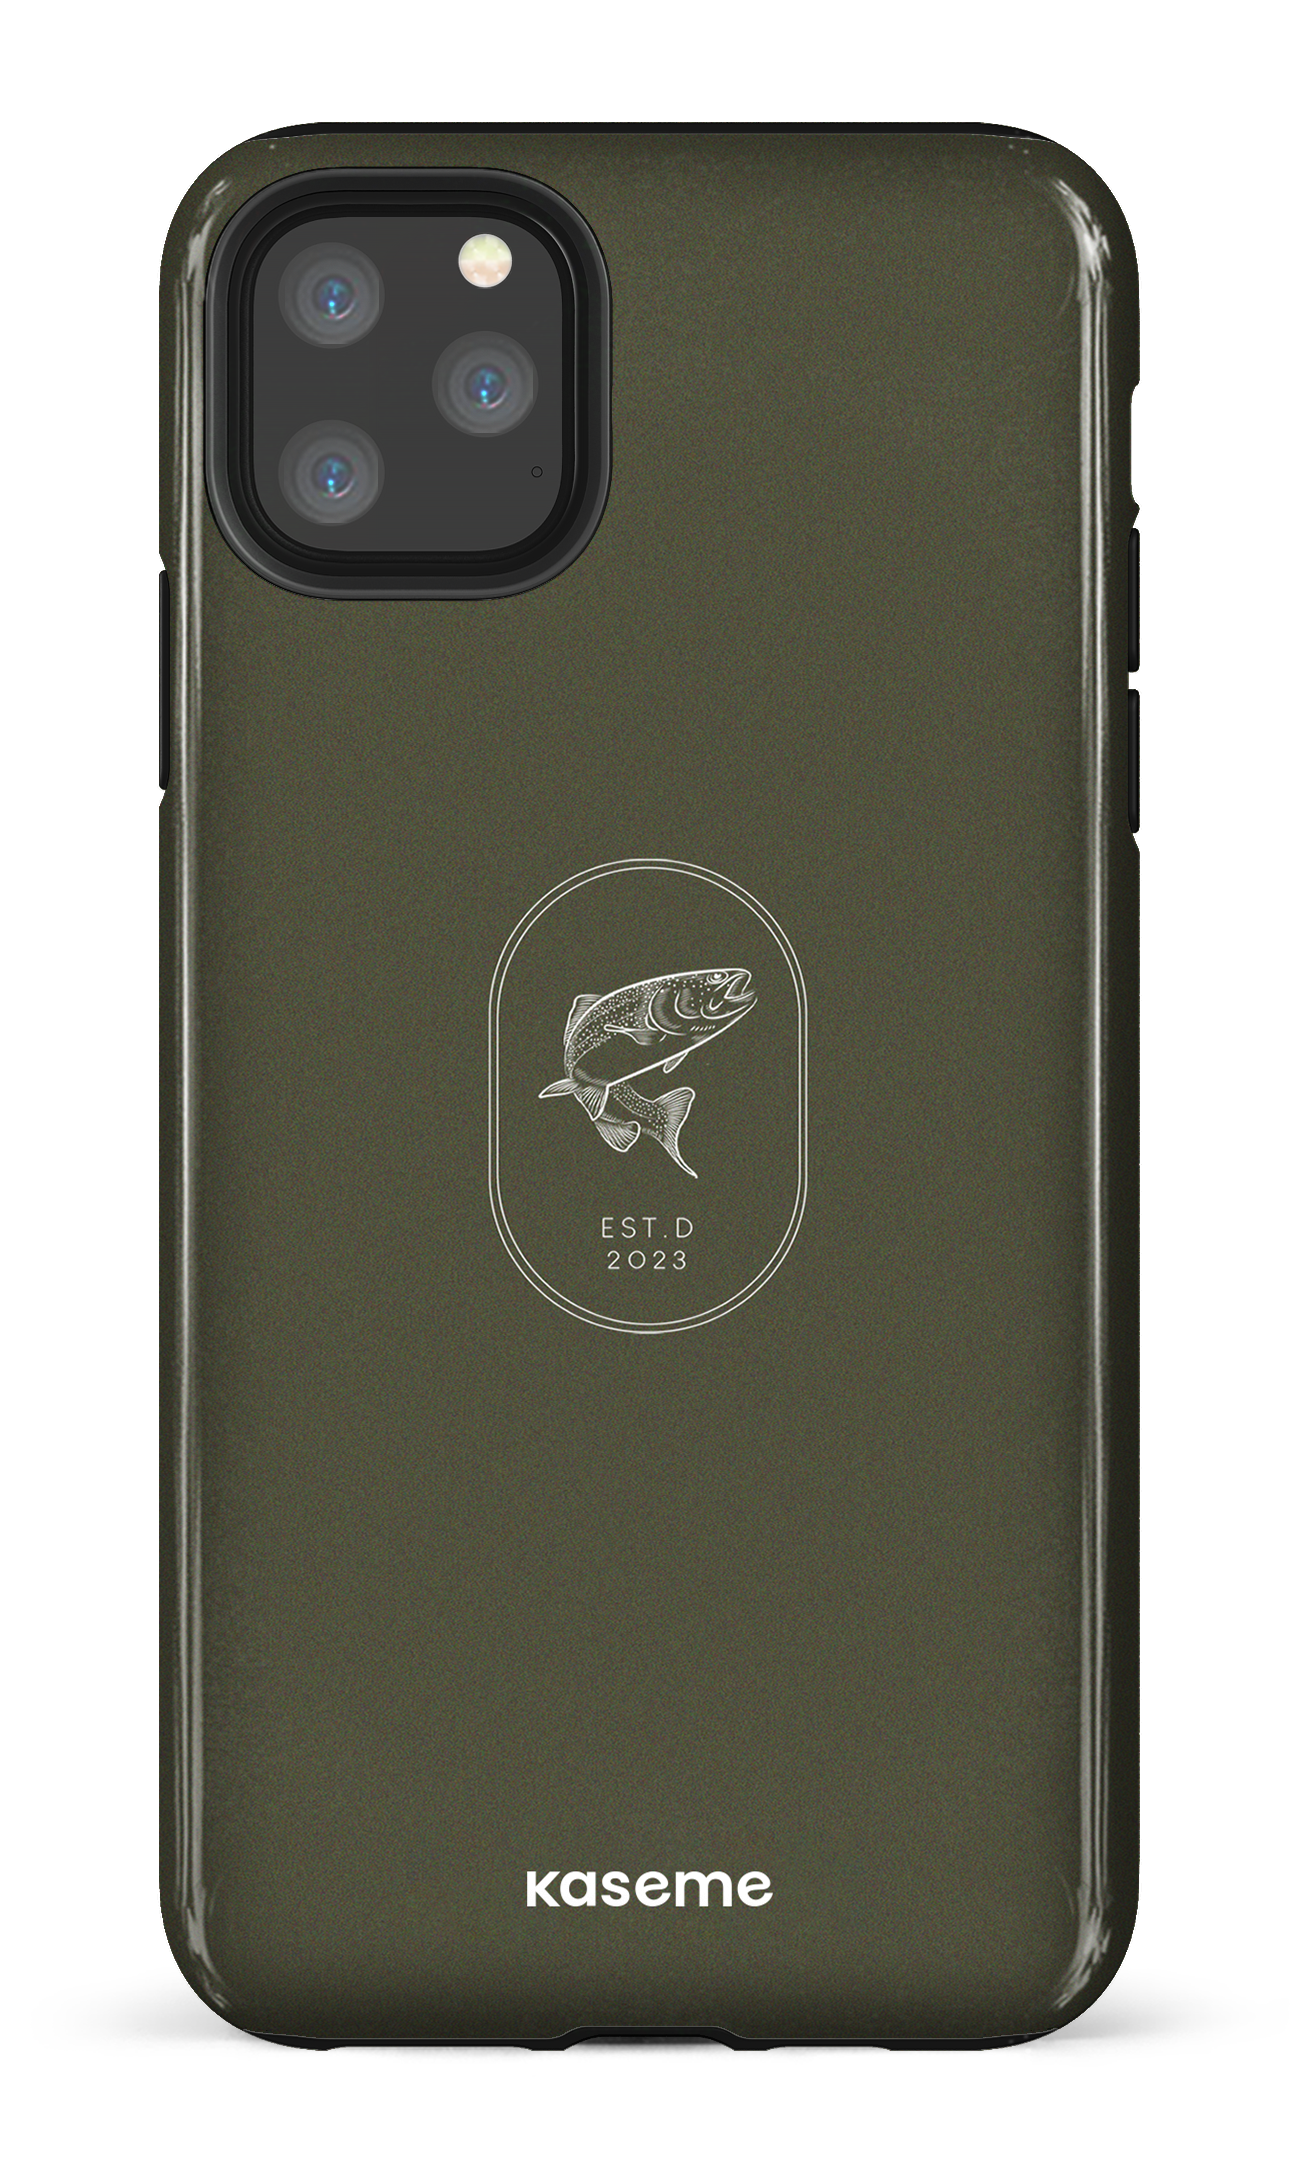 Fishing Green - iPhone 11 Pro Max